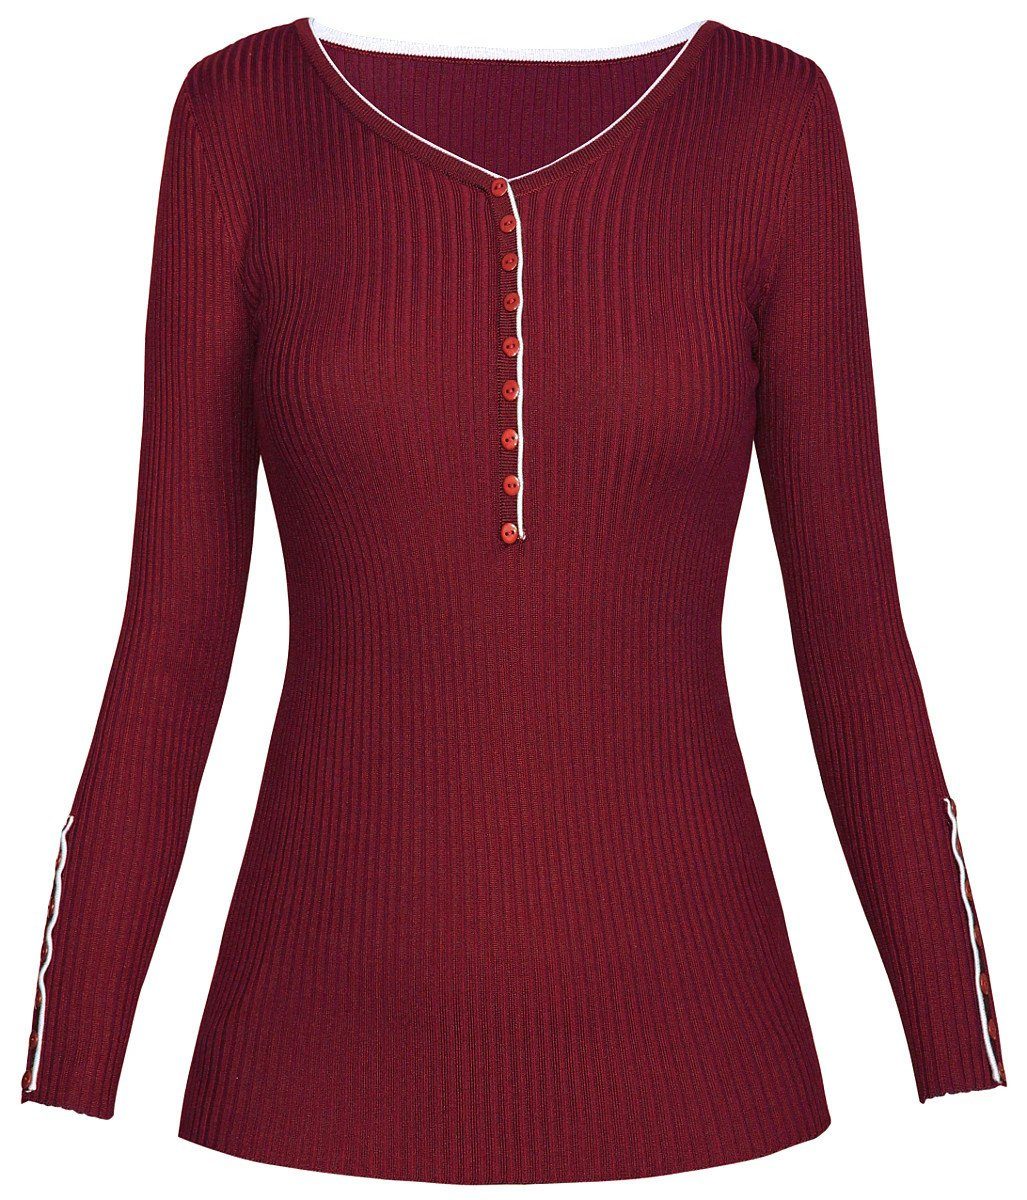 Unifarbe dy_mode Pullover mit V-Ausschnitt-Pullover Rippenstrick Enganliegend in Damen PUL001-Weinrot V-Ausschnitt Pulli